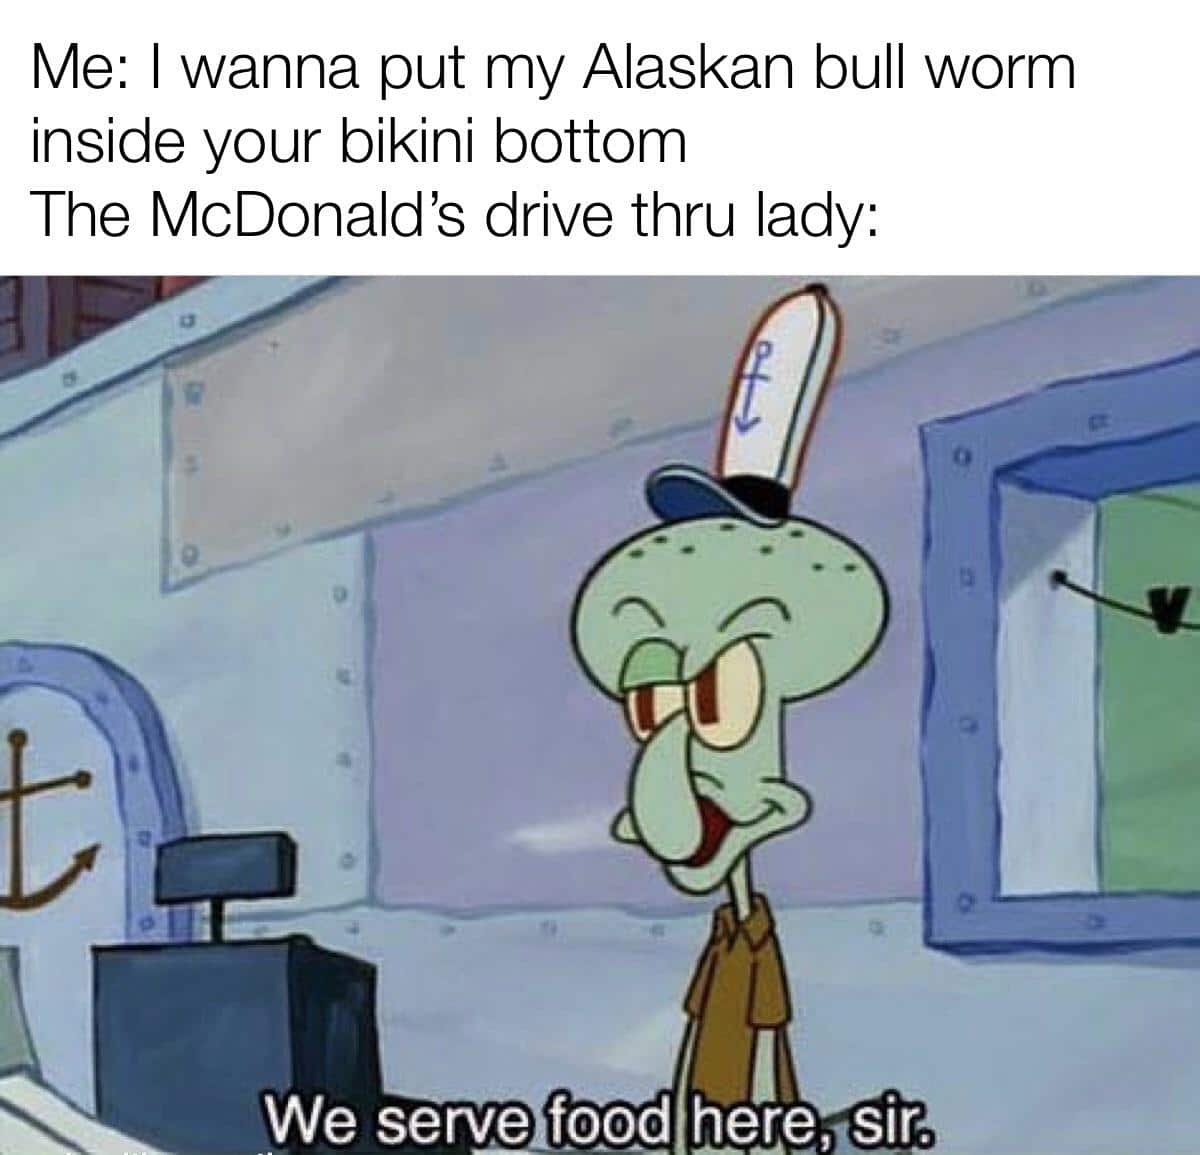 Spongebob,  Spongebob Memes Spongebob,  text: Me: I wanna put my Alaskan bull worm inside your bikini bottom The McDonald's drive thru lady: We serv.e fopß mere,sjr. 